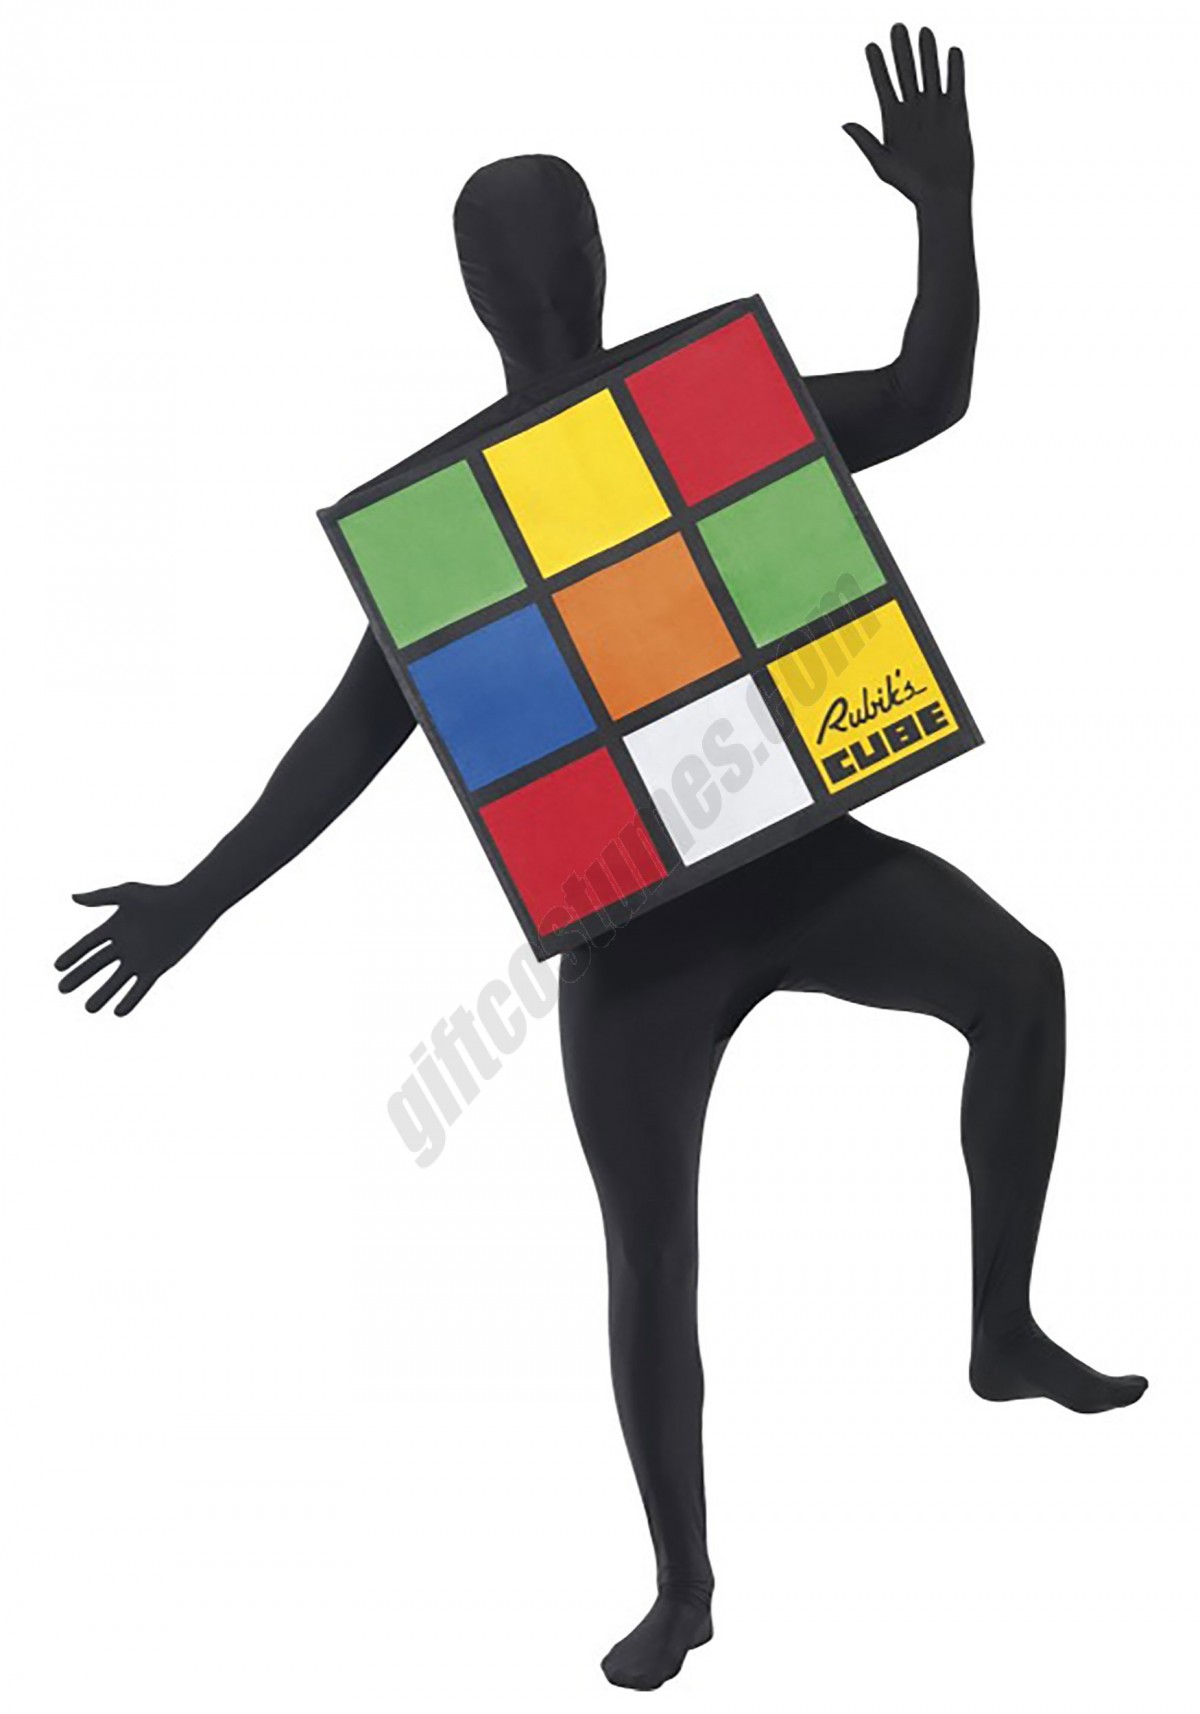 Rubik's Cube Costume for Adults - Women's - -0